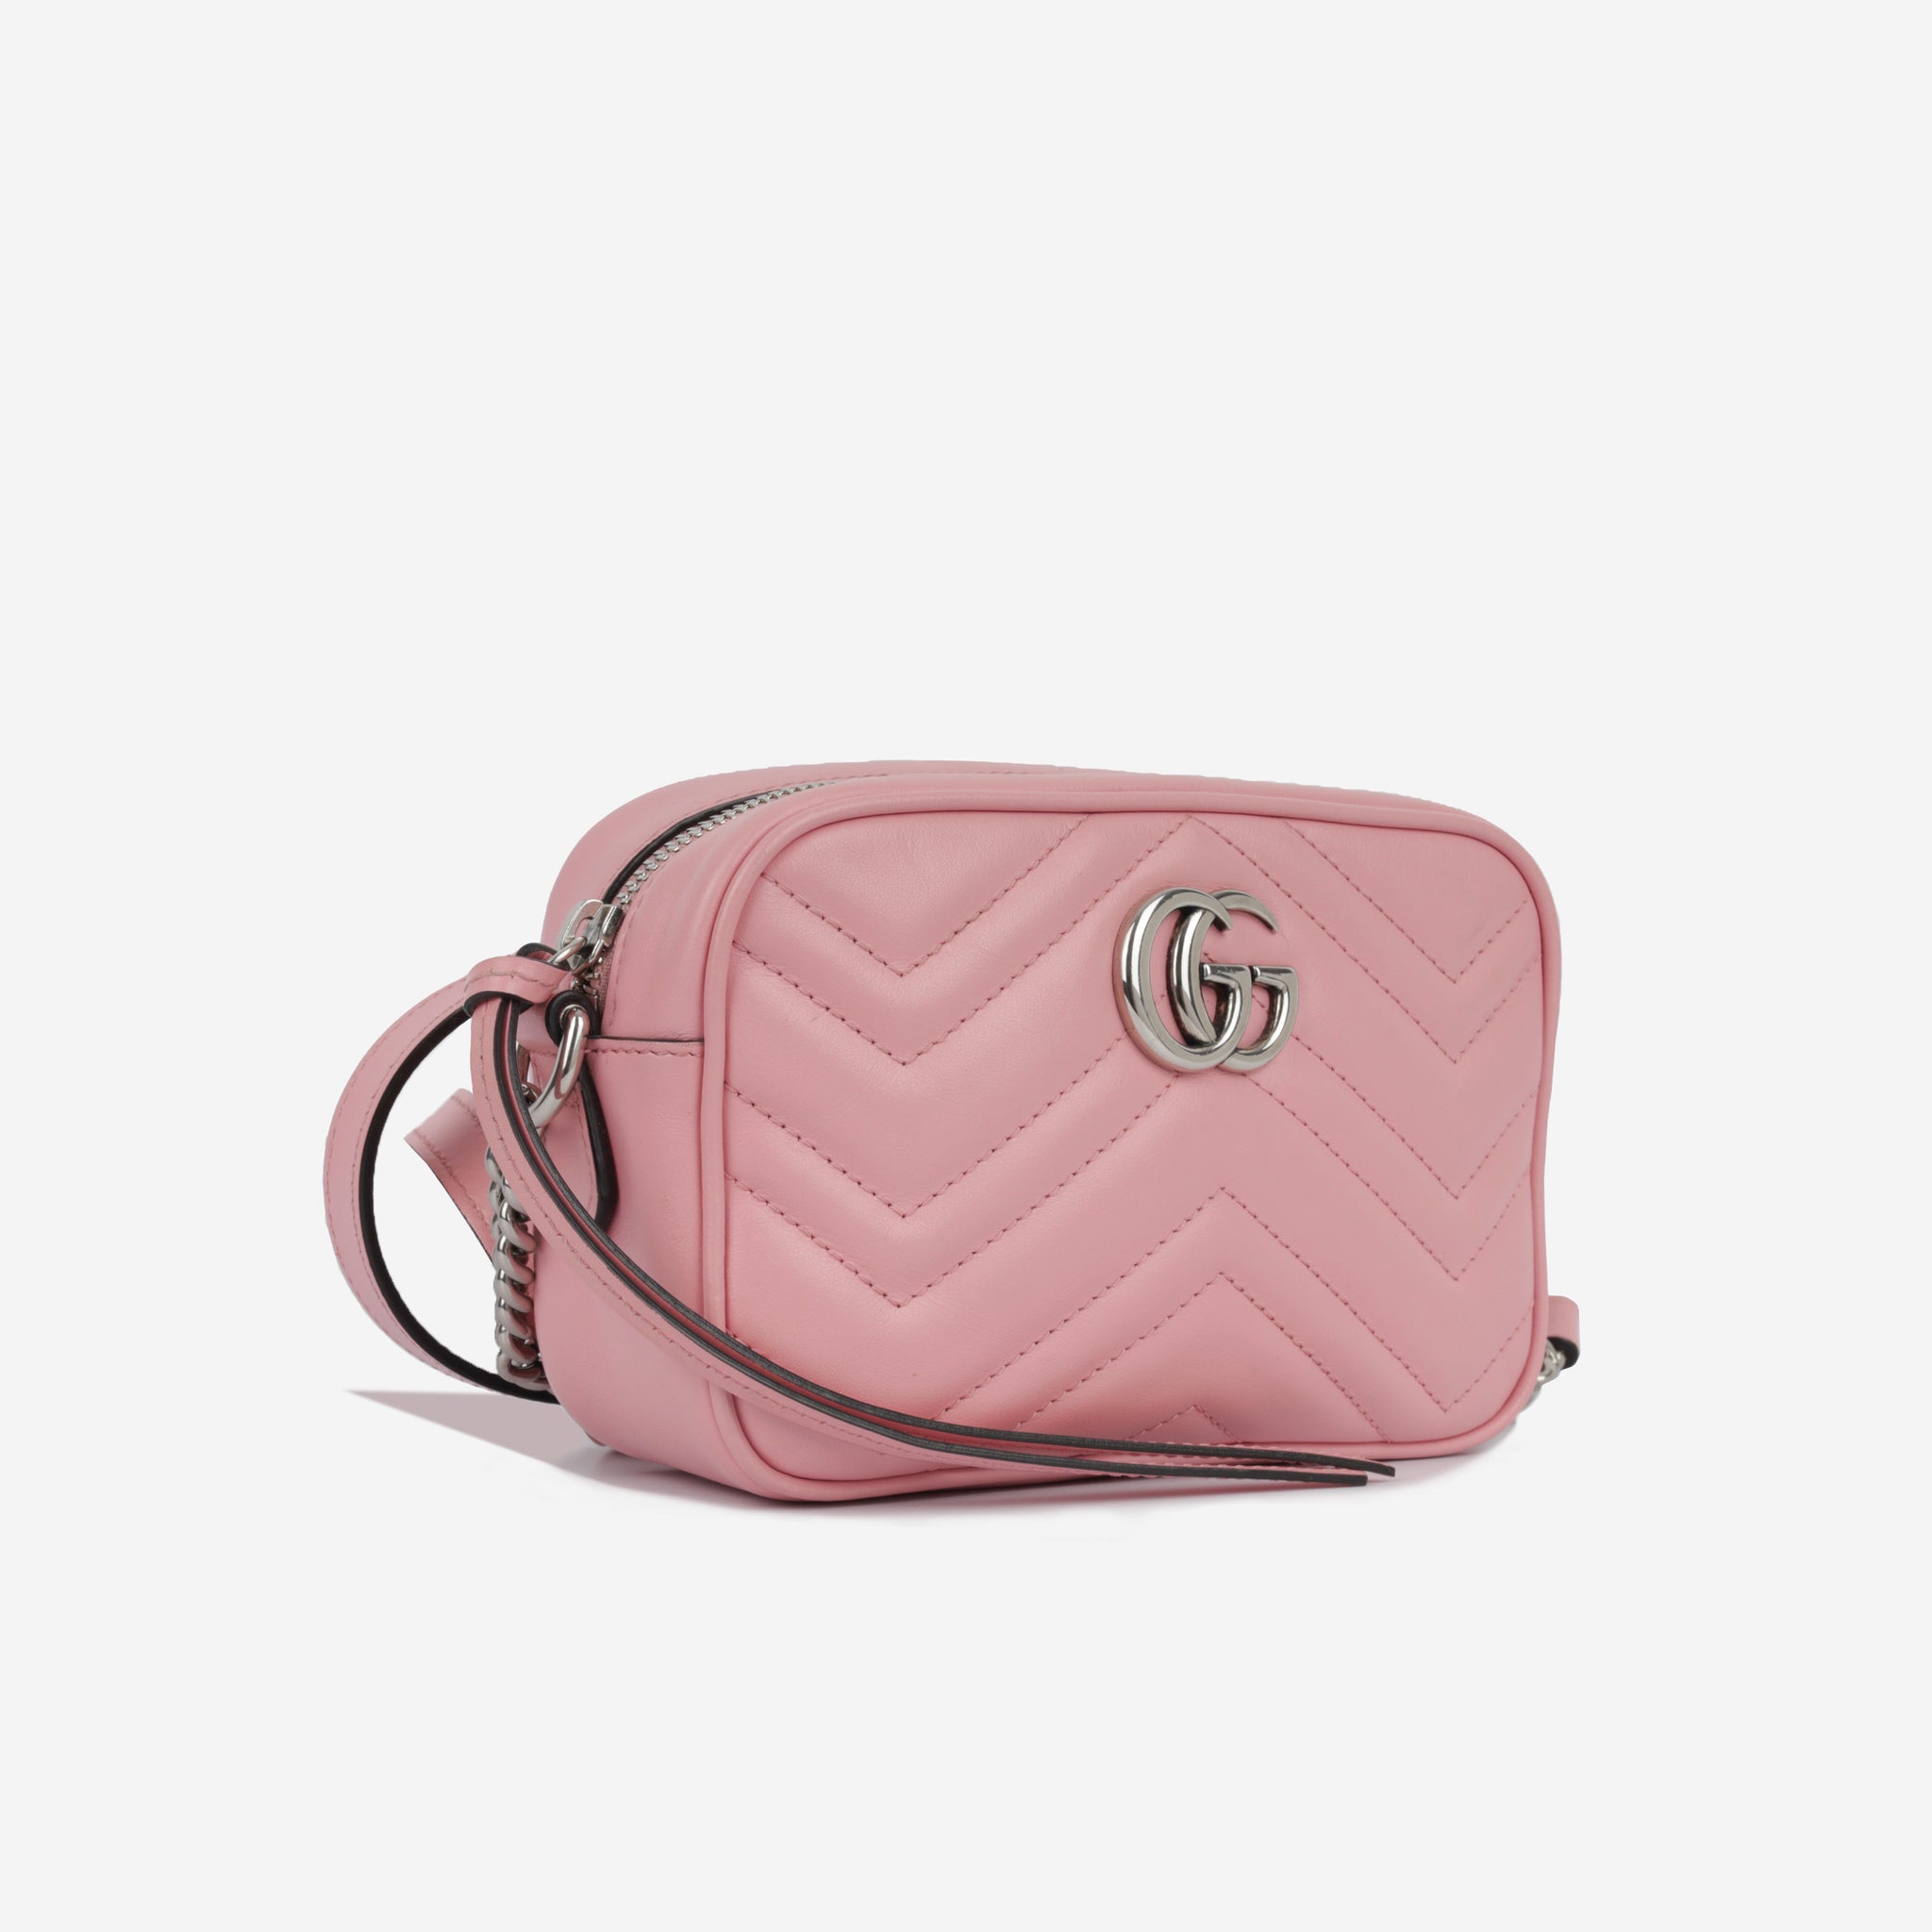 Gucci - Mini Marmont Bag - Pink Calfskin Matelassé Leather - SHW - Pre  Loved